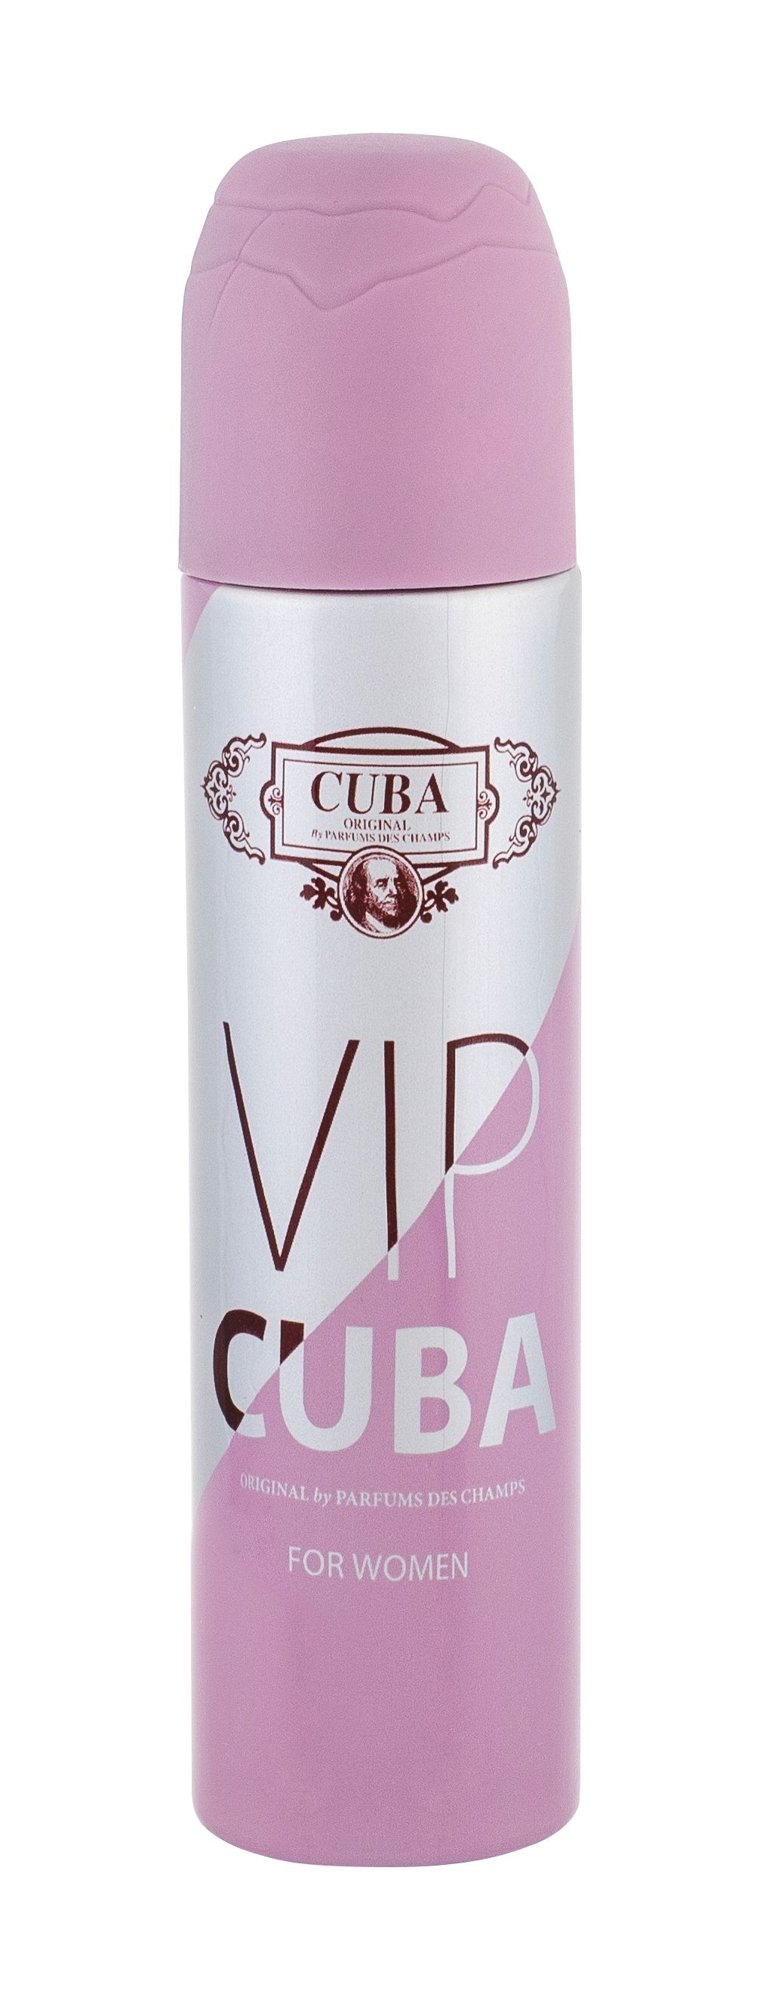 Cuba VIP, Parfumovaná voda 100ml